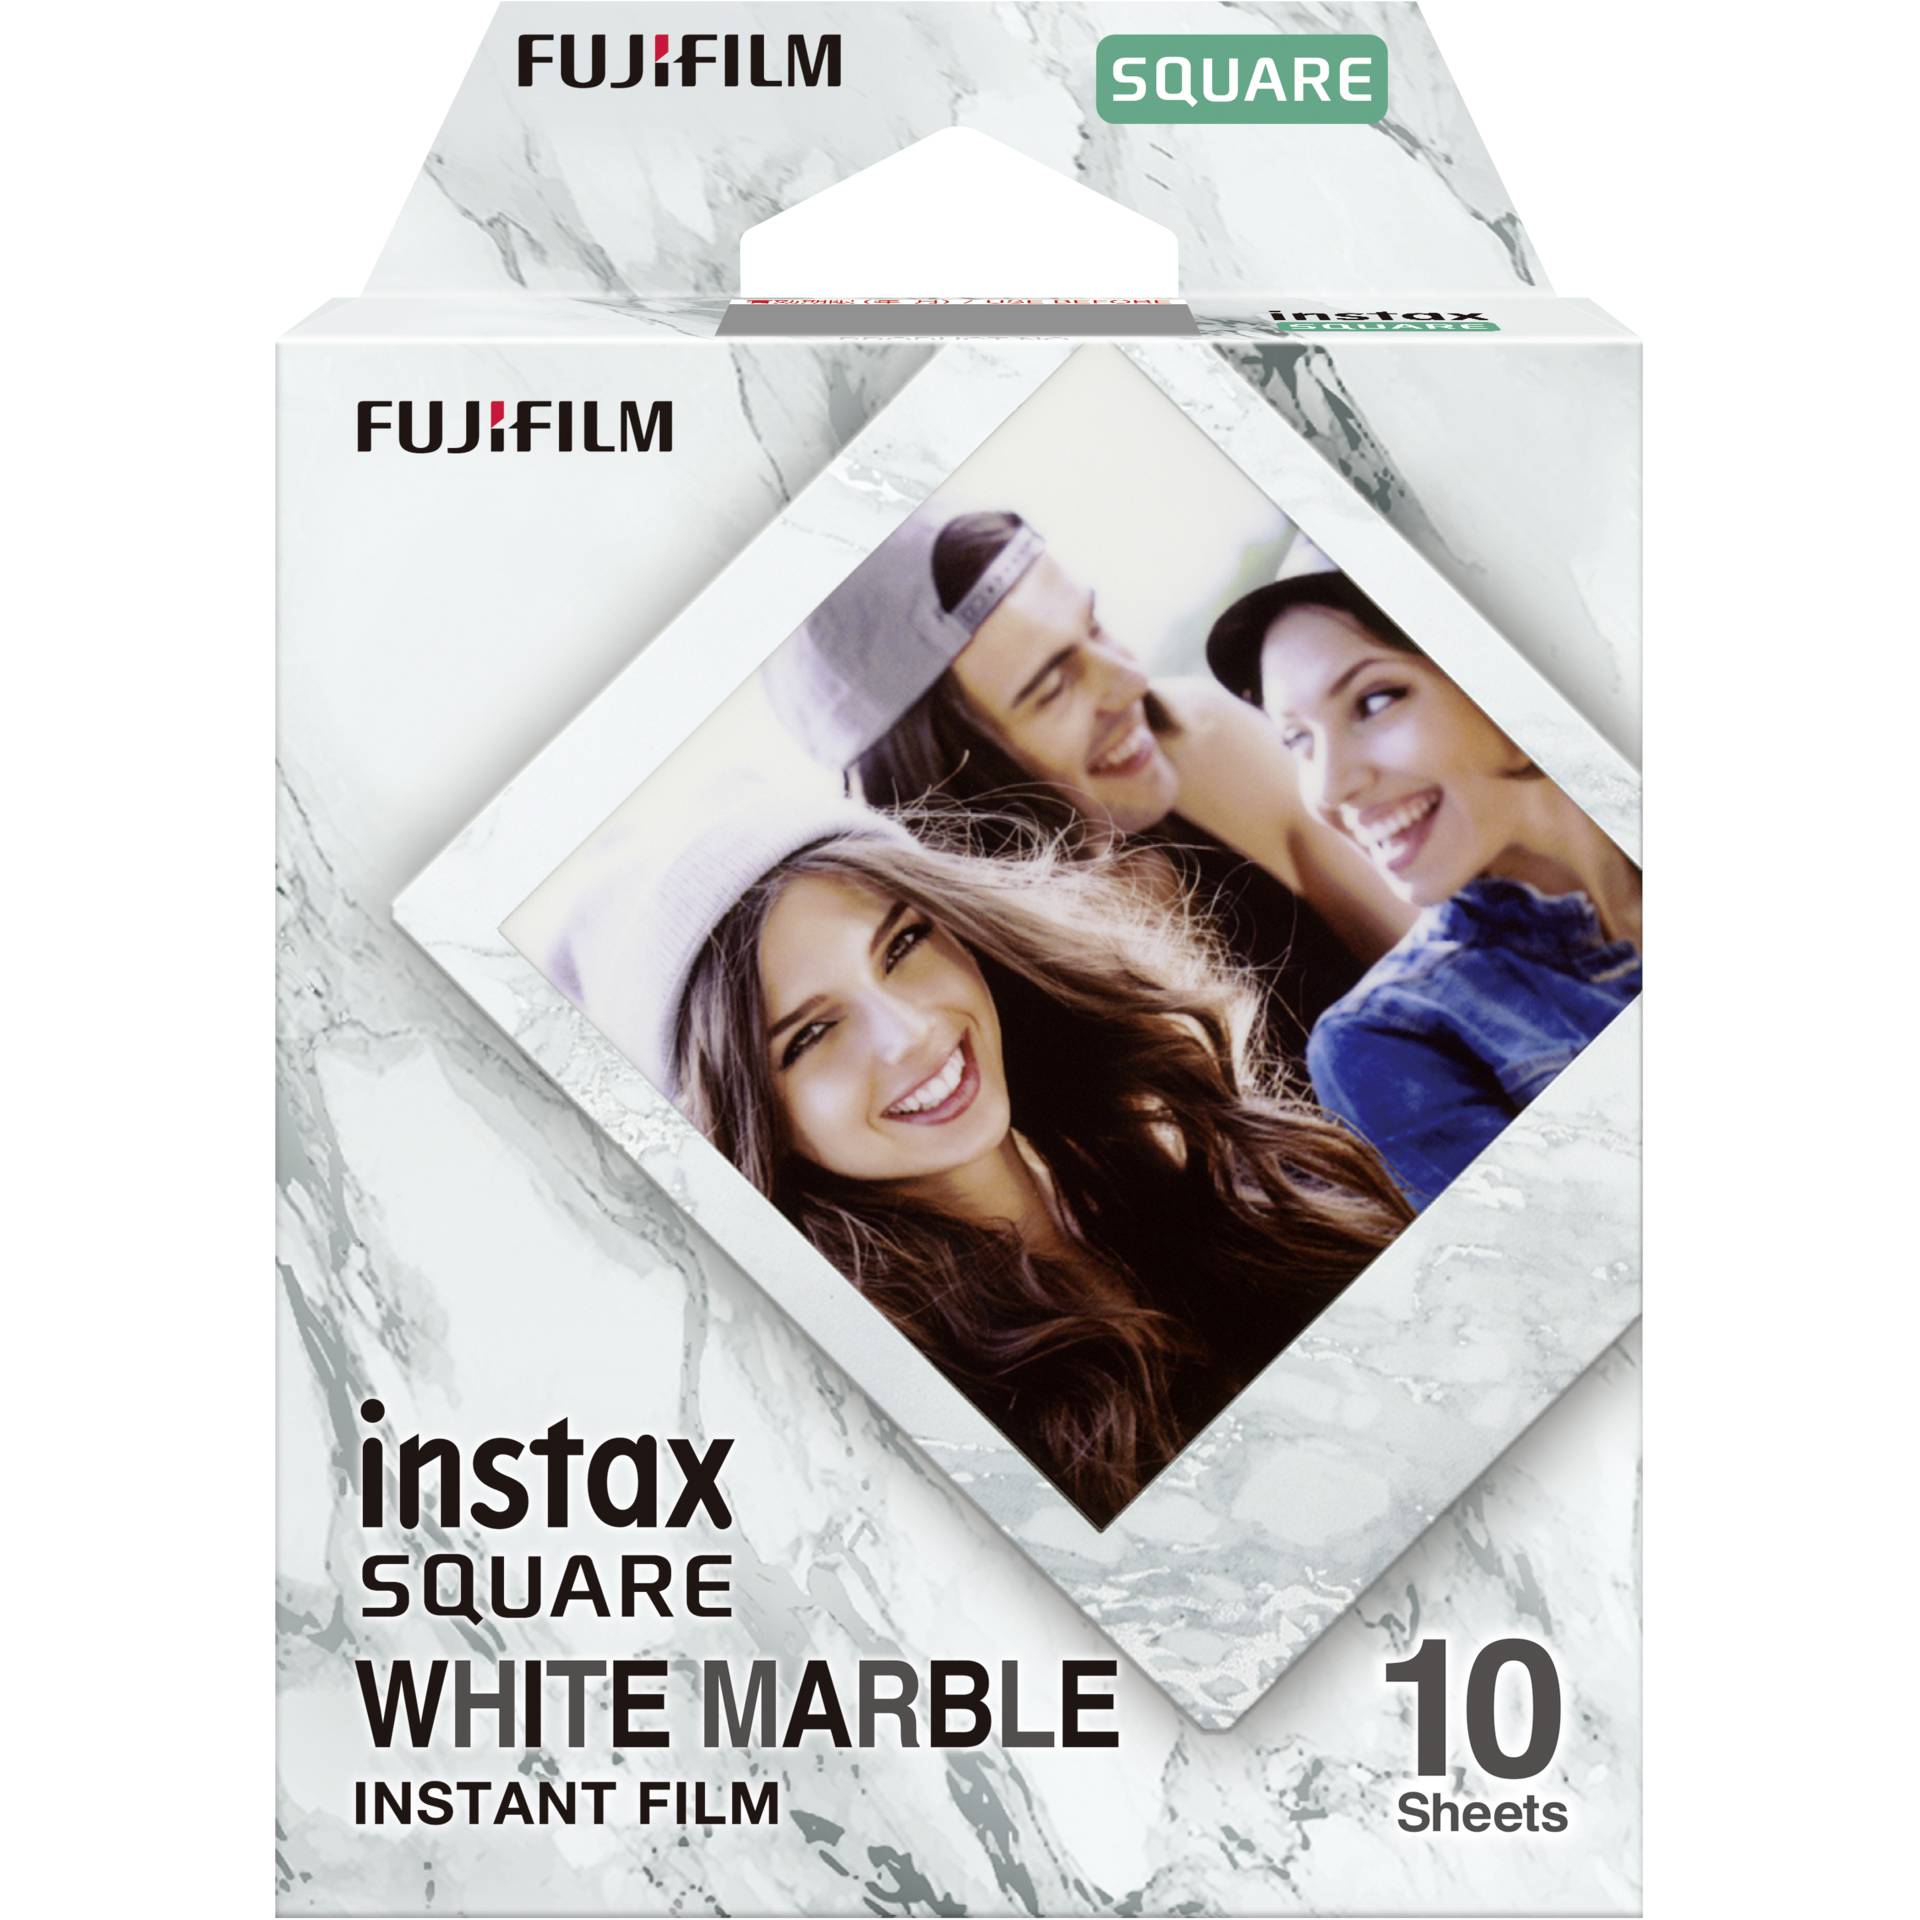 1 Fujifilm instax Square Film bianco marble